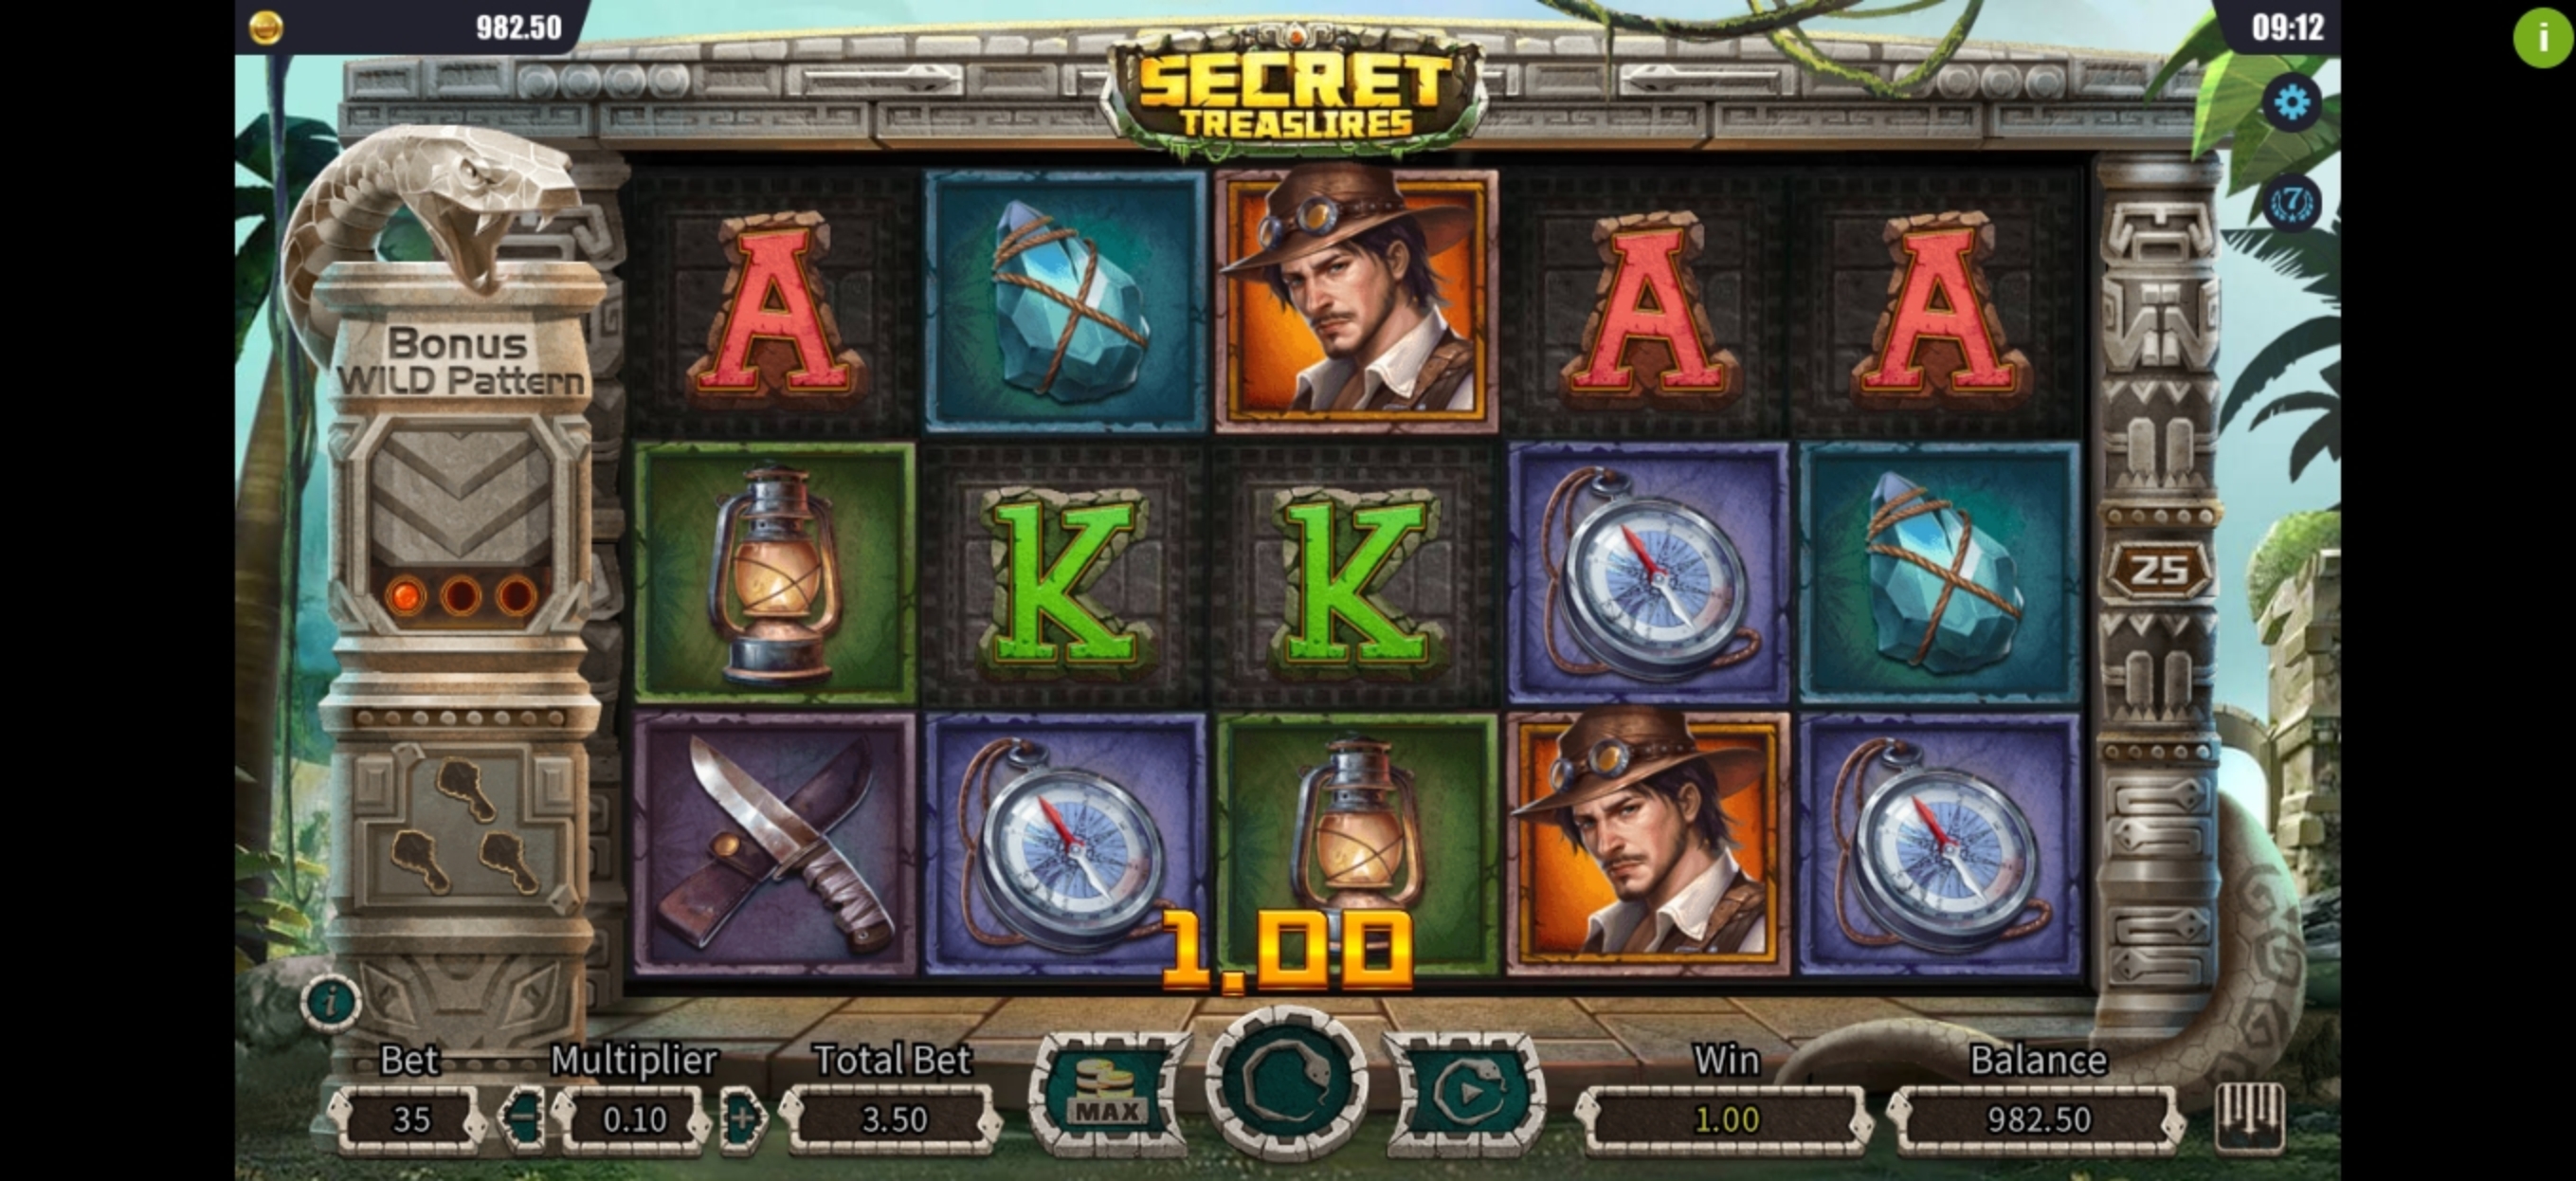 Win Money in Secret Treasures Free Slot Game by Dream Tech